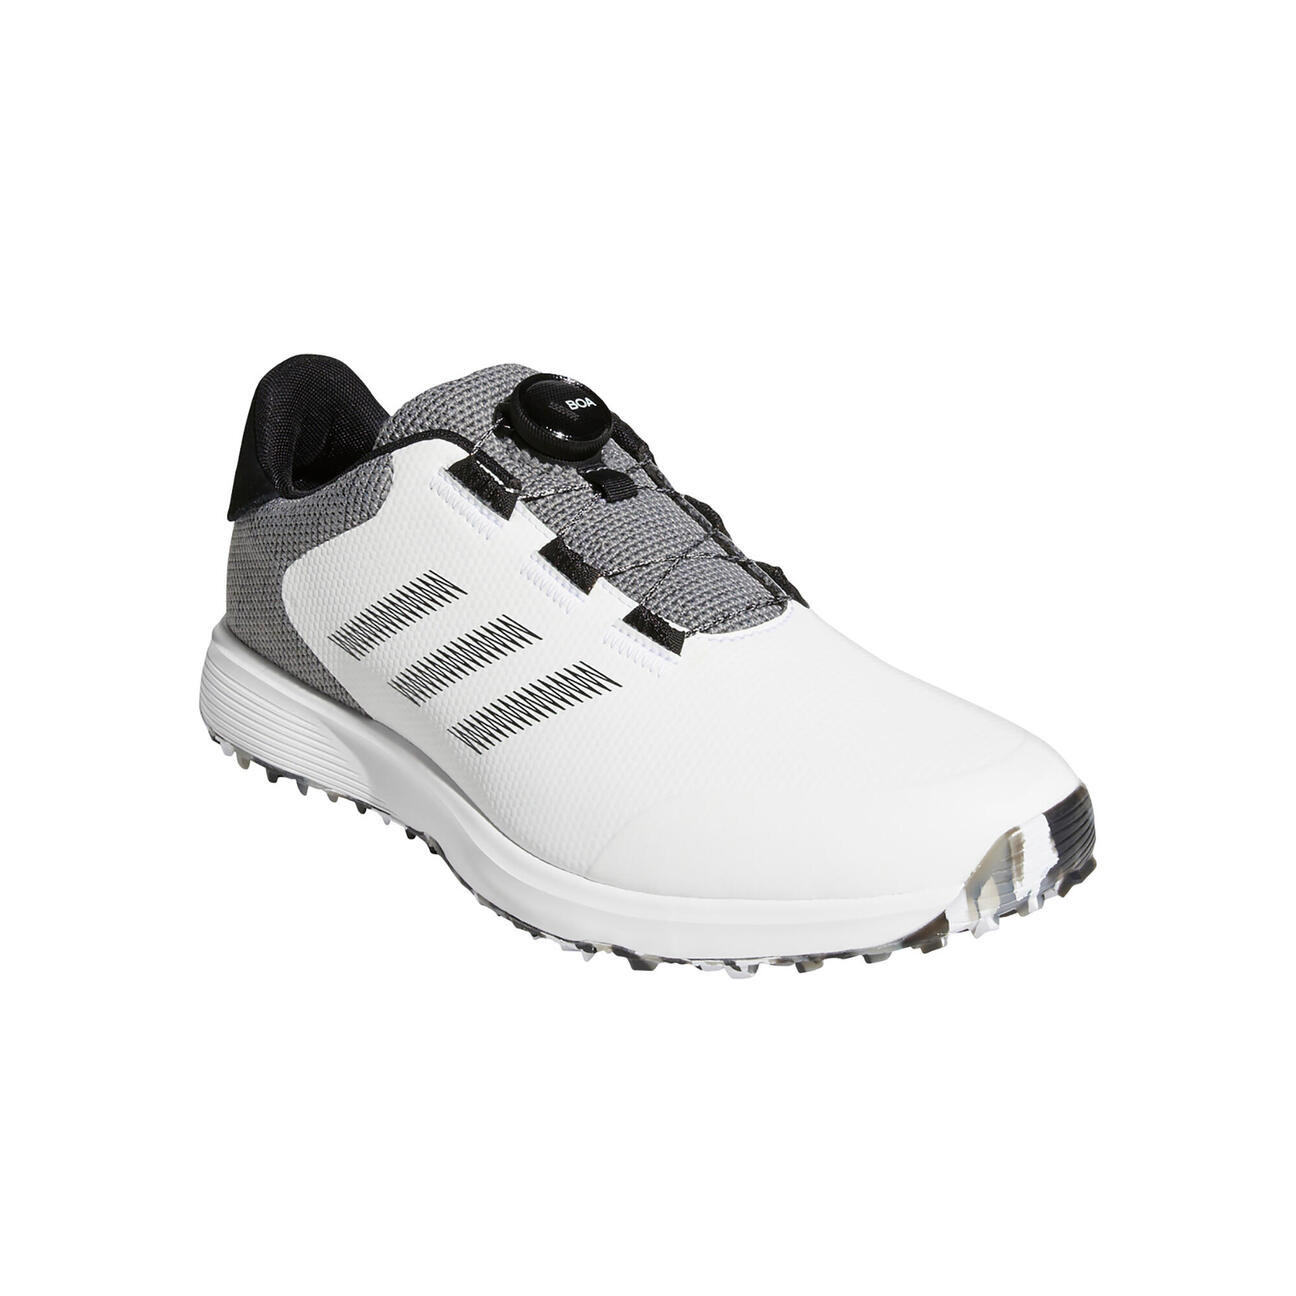 Men’s waterproof golf shoes Adicross Boa - white and grey Adidas ...